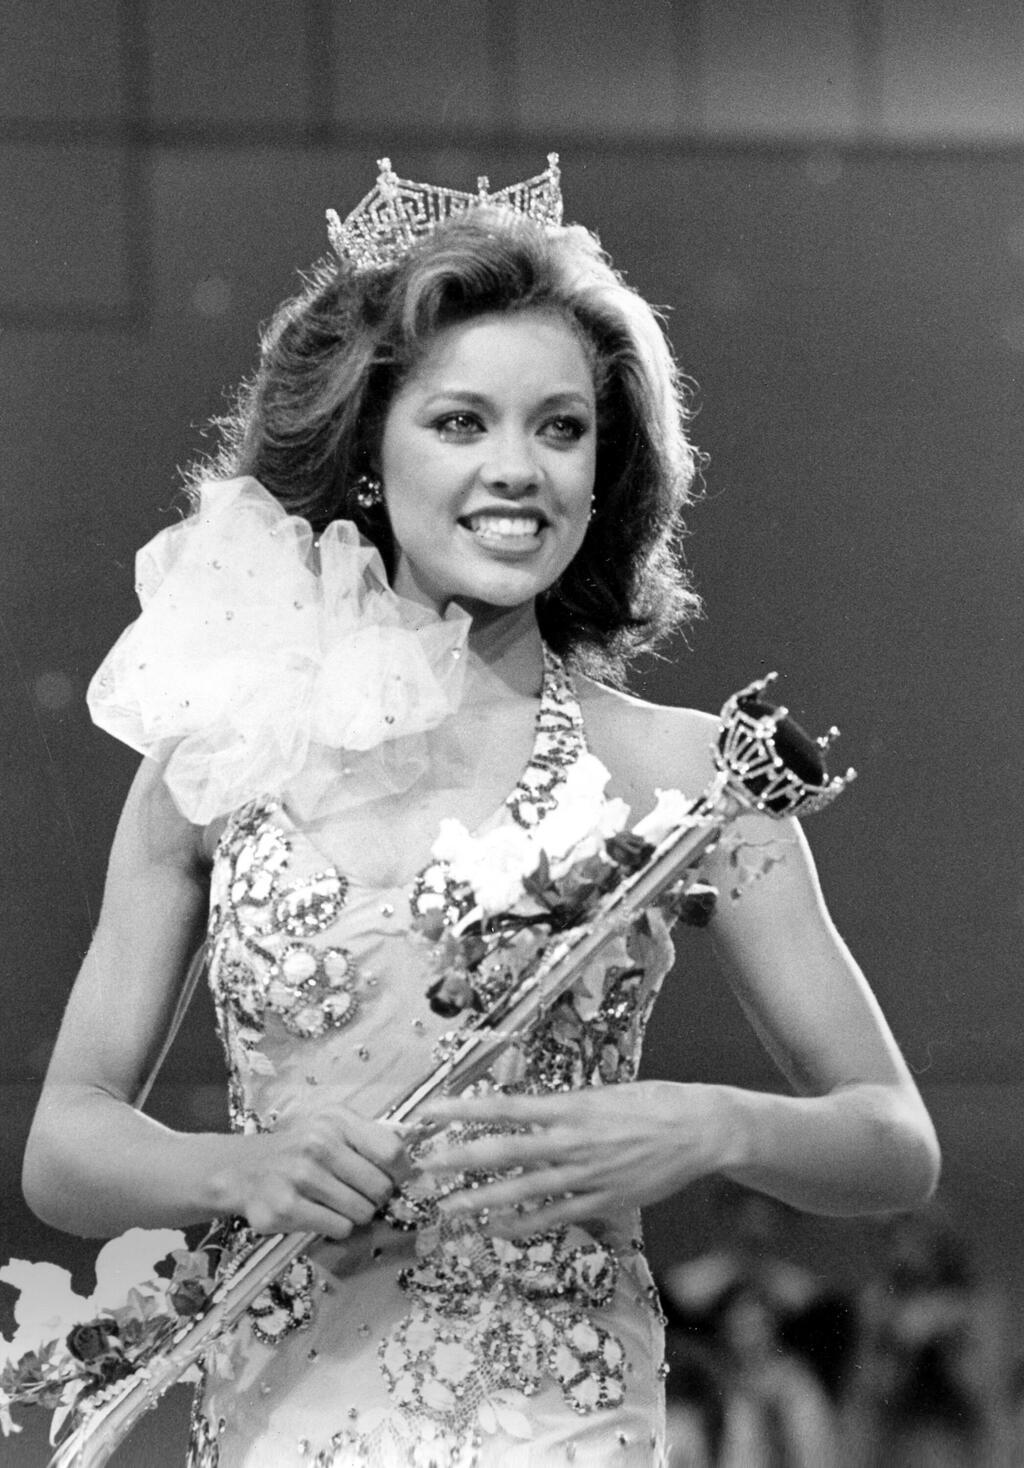 ונסה וויליאמס בהכתרה למיס אמריקה לשנת 1984